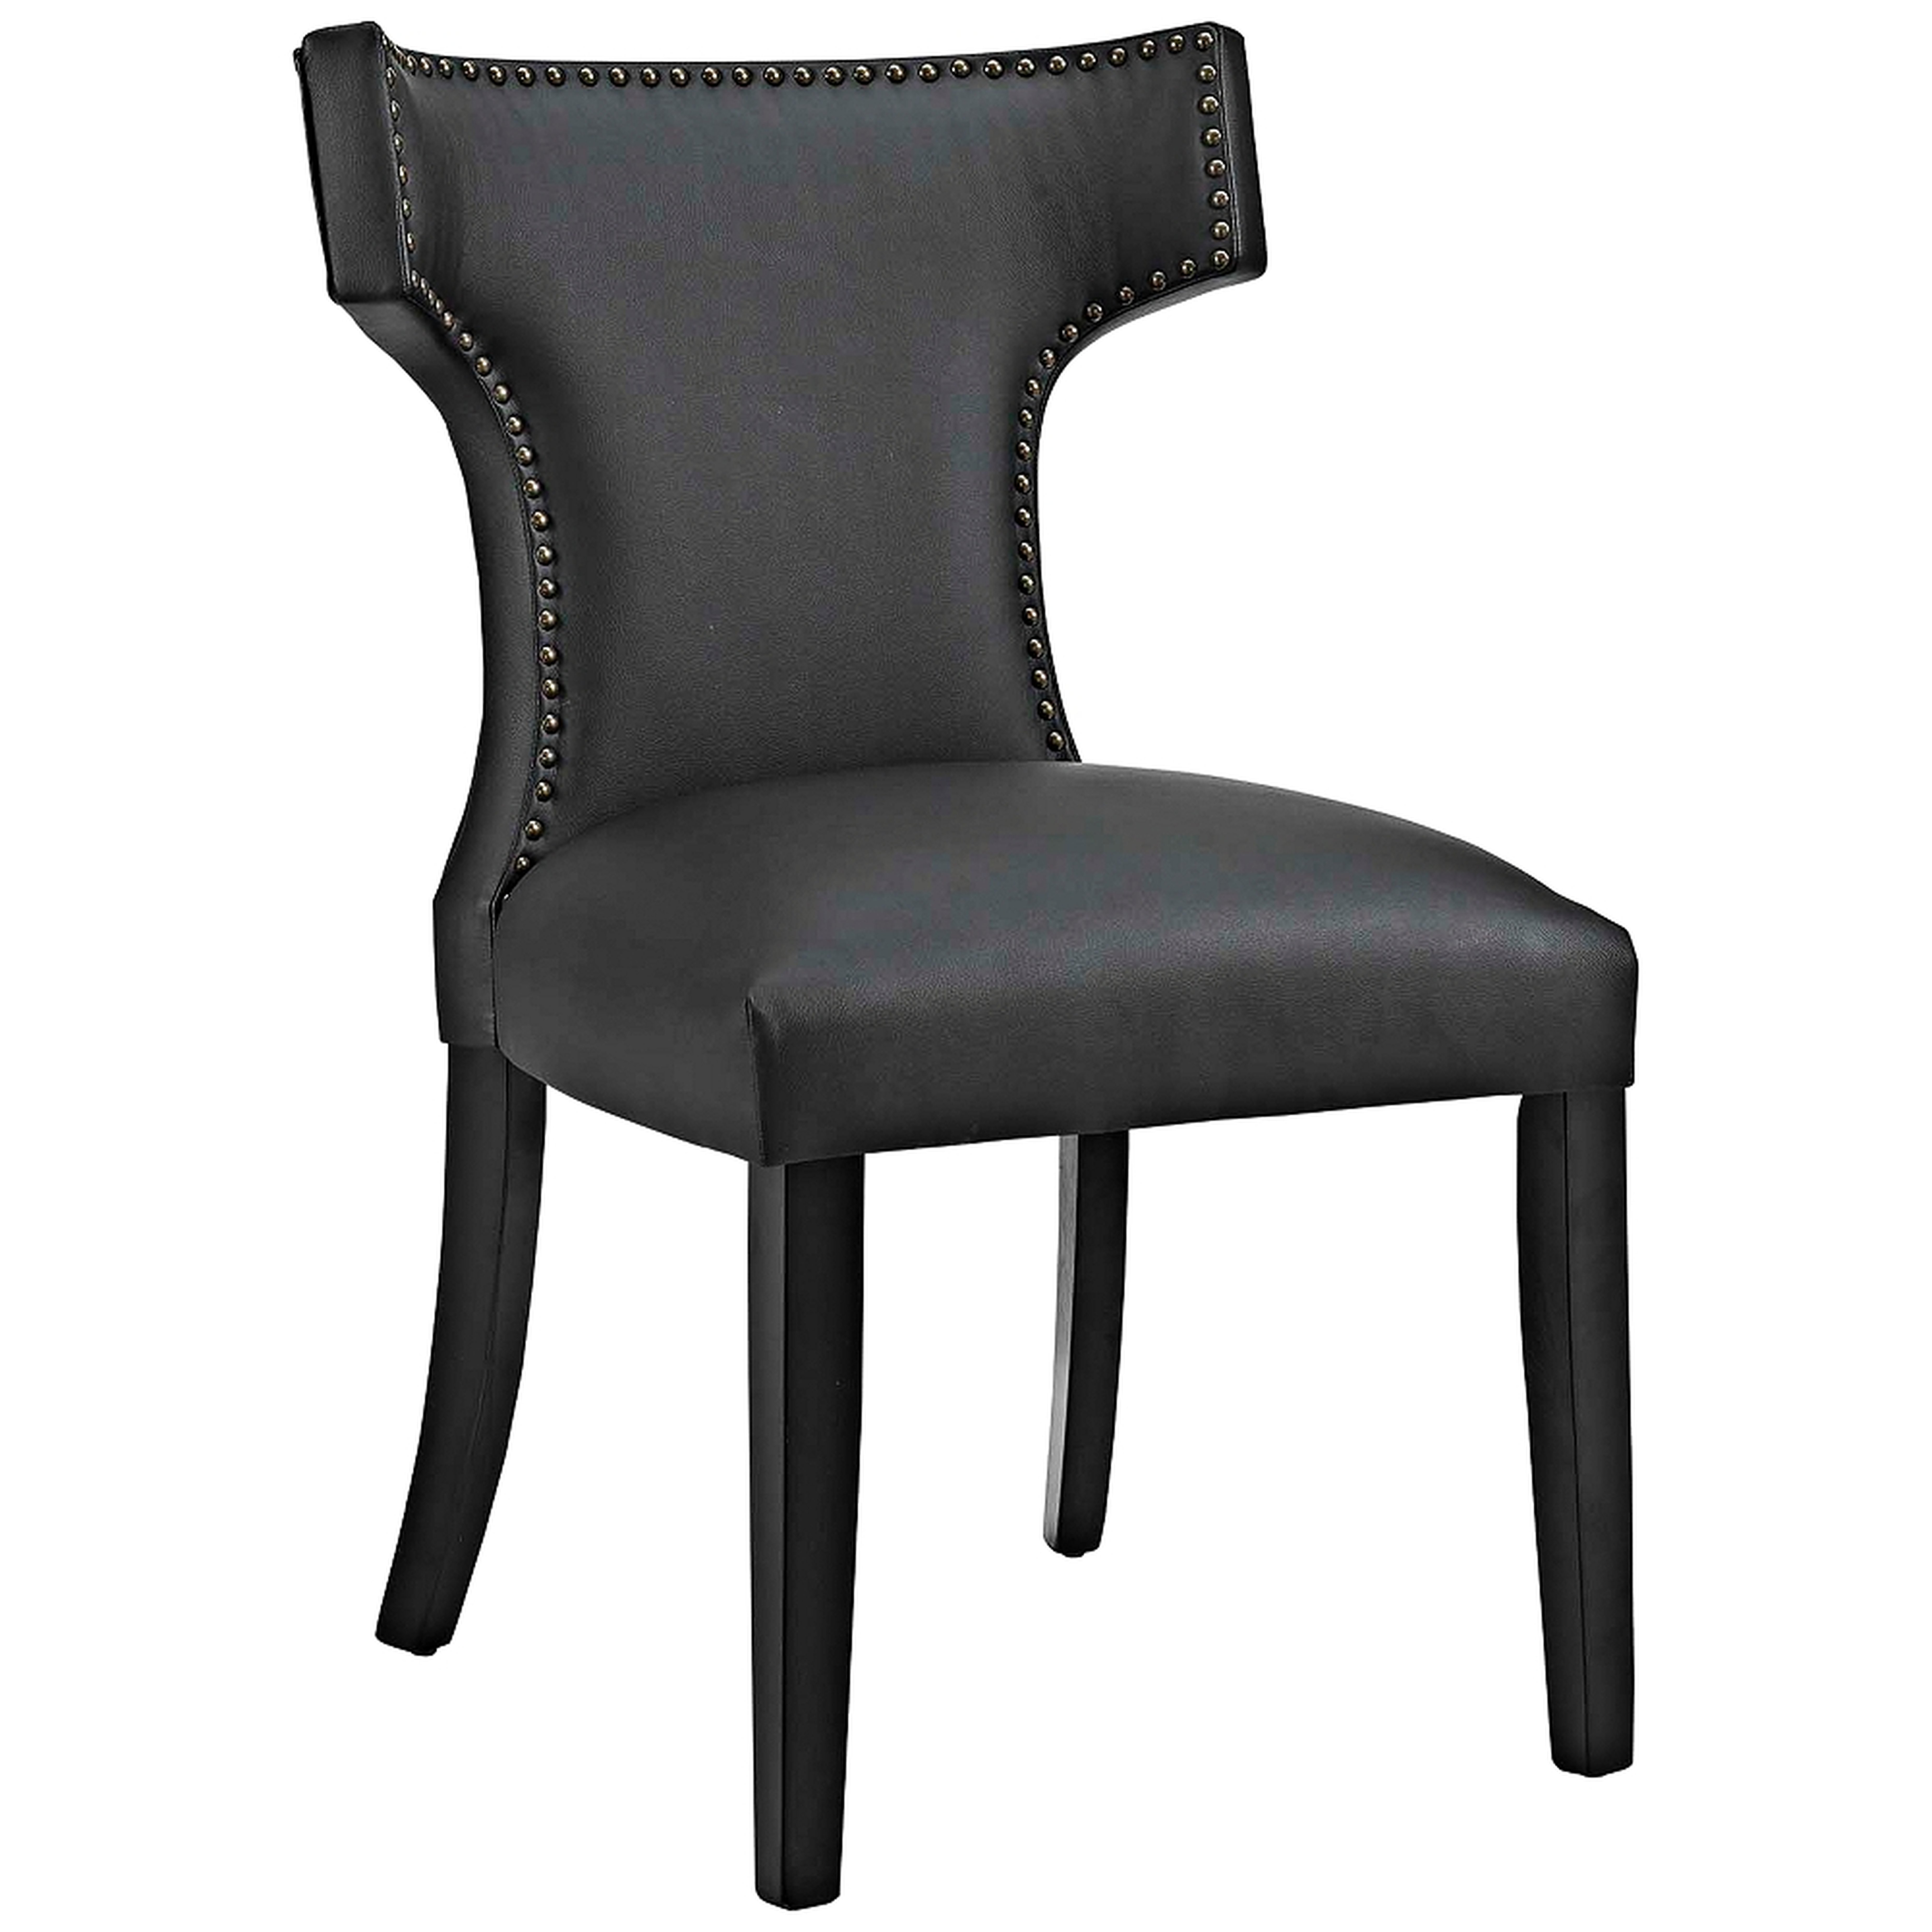 Curve Black Vinyl Dining Chair - Style # 33T41 - Lamps Plus